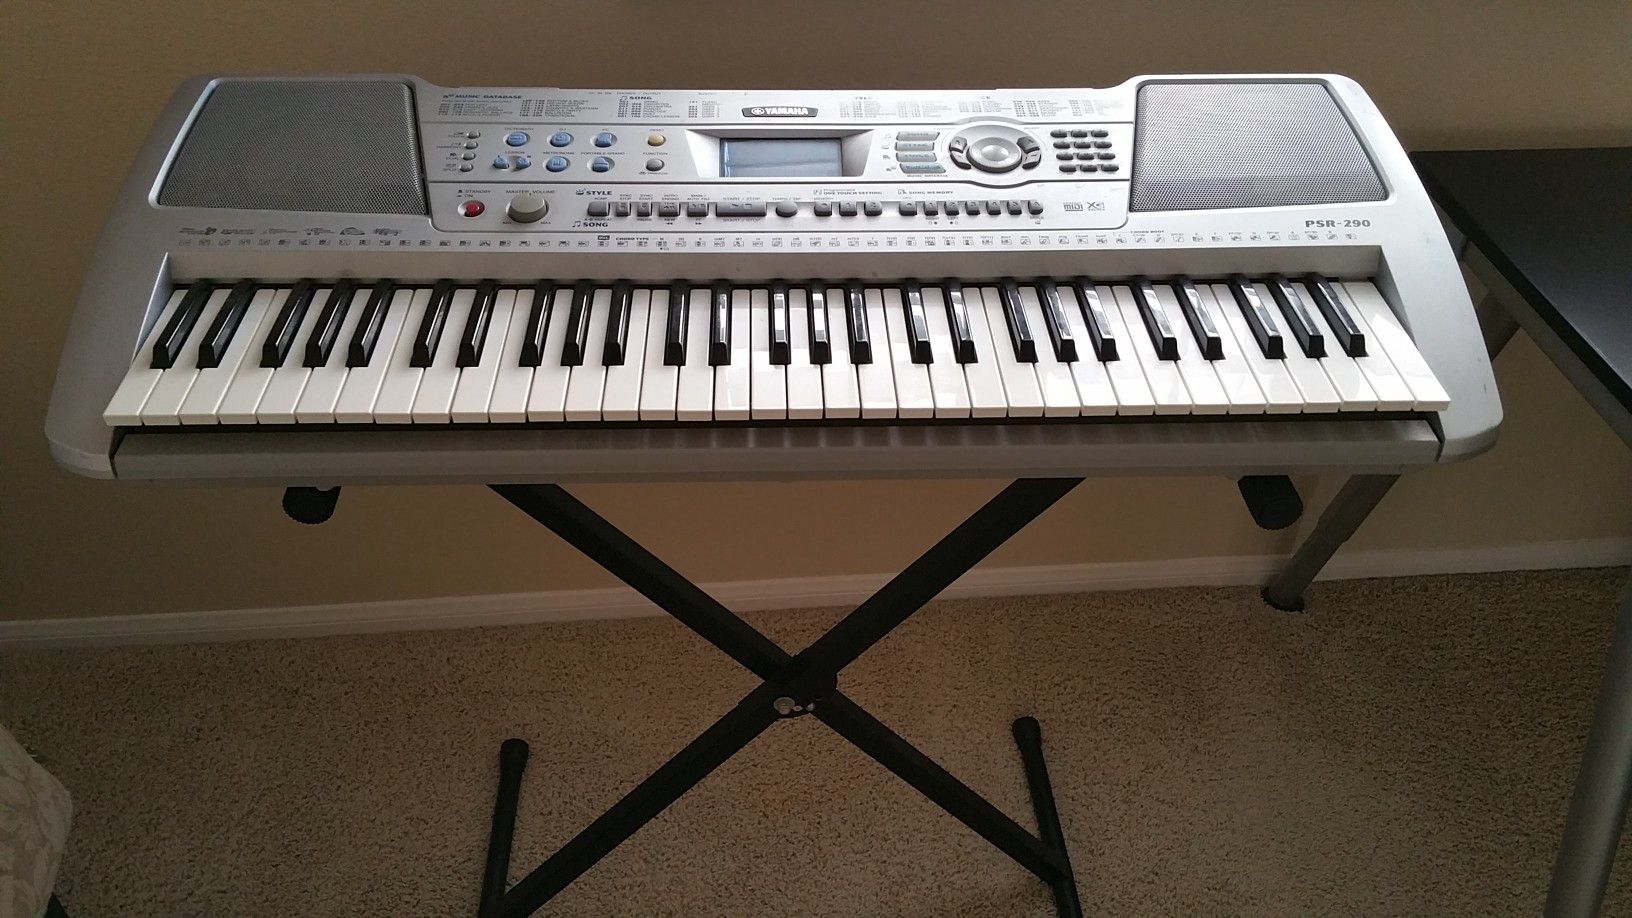 Yamaha PSR-290 keyboard with stand